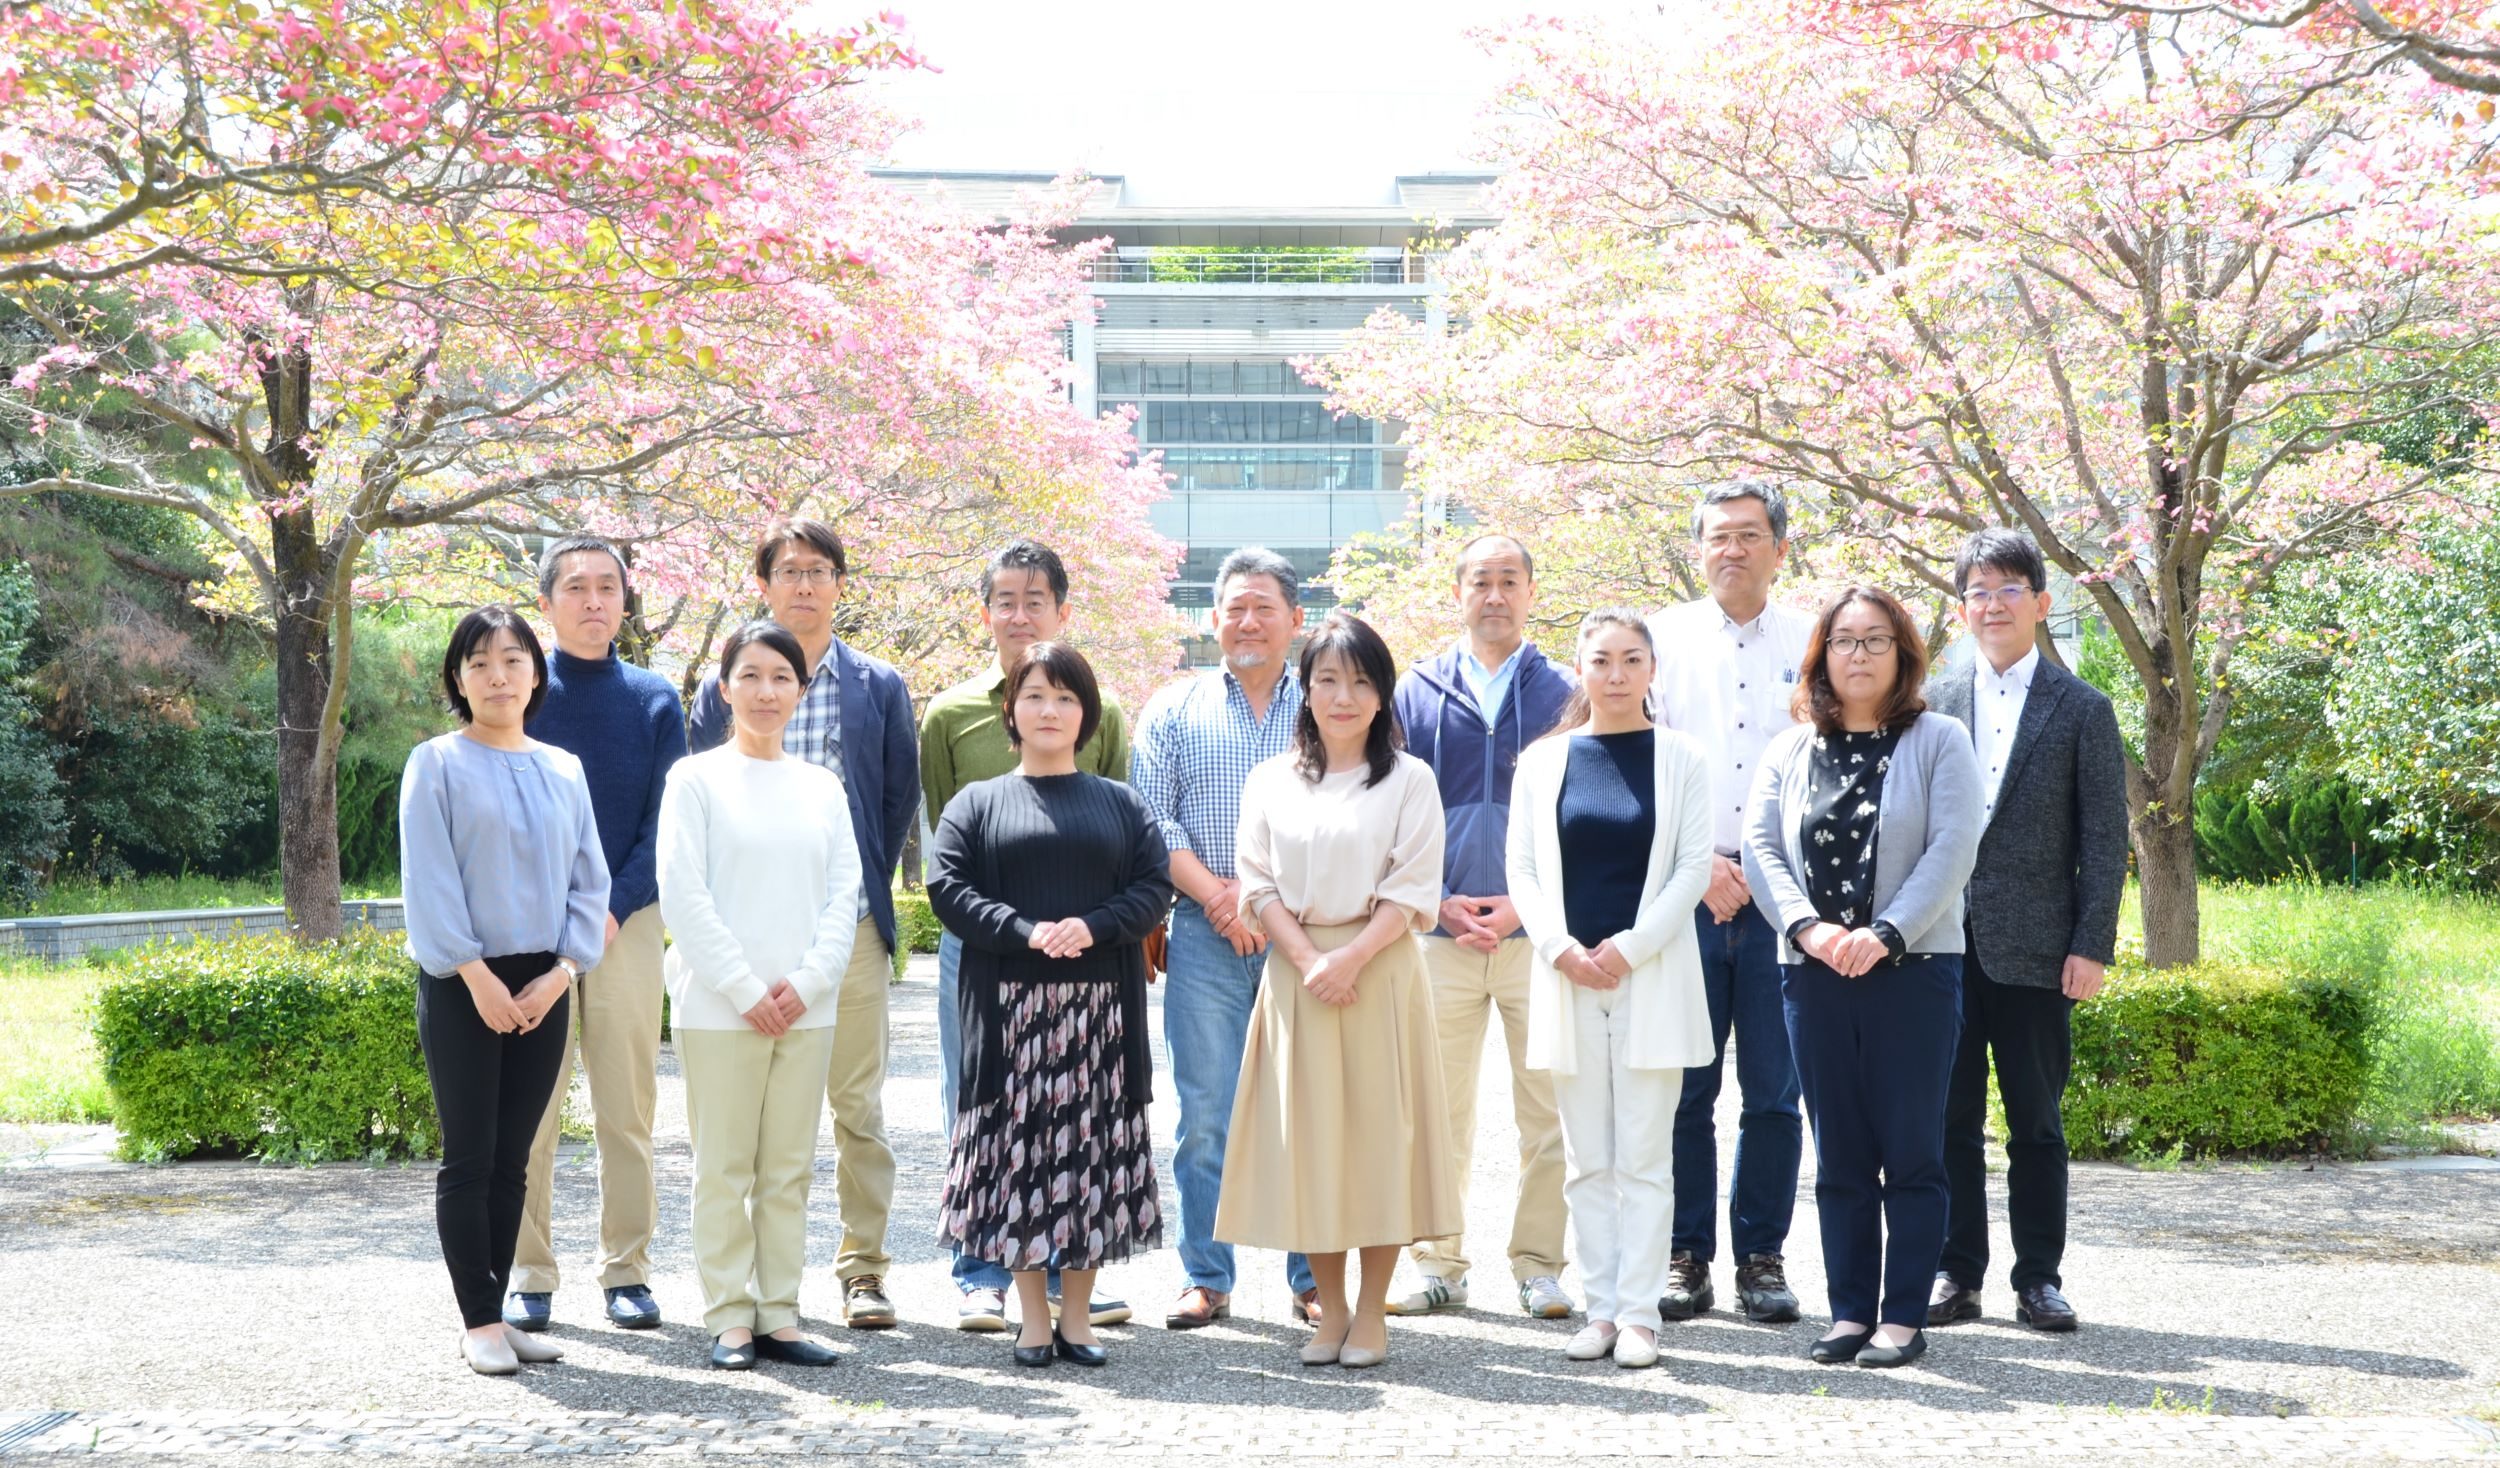 IPNS Director: SAITO, Naohito<br />
(in the center of the second row),<br />
WAKO Nuclear Science Center Head: WADA, Michiharu<br />
Deputy Director: KOMATSUBARA, Takeshi, HANAGAKI, Kazunori (hold Detector R&D Center Head), USHIRODA, Yutaka<br />
Engineering Coordinator: KAWAI, Masanori<br />
Theory Center Head: HASHIMOTO, Shoji<br />
(in the second row, from right to left)<br />
<br />
IPNS Administraion office member (Front row)